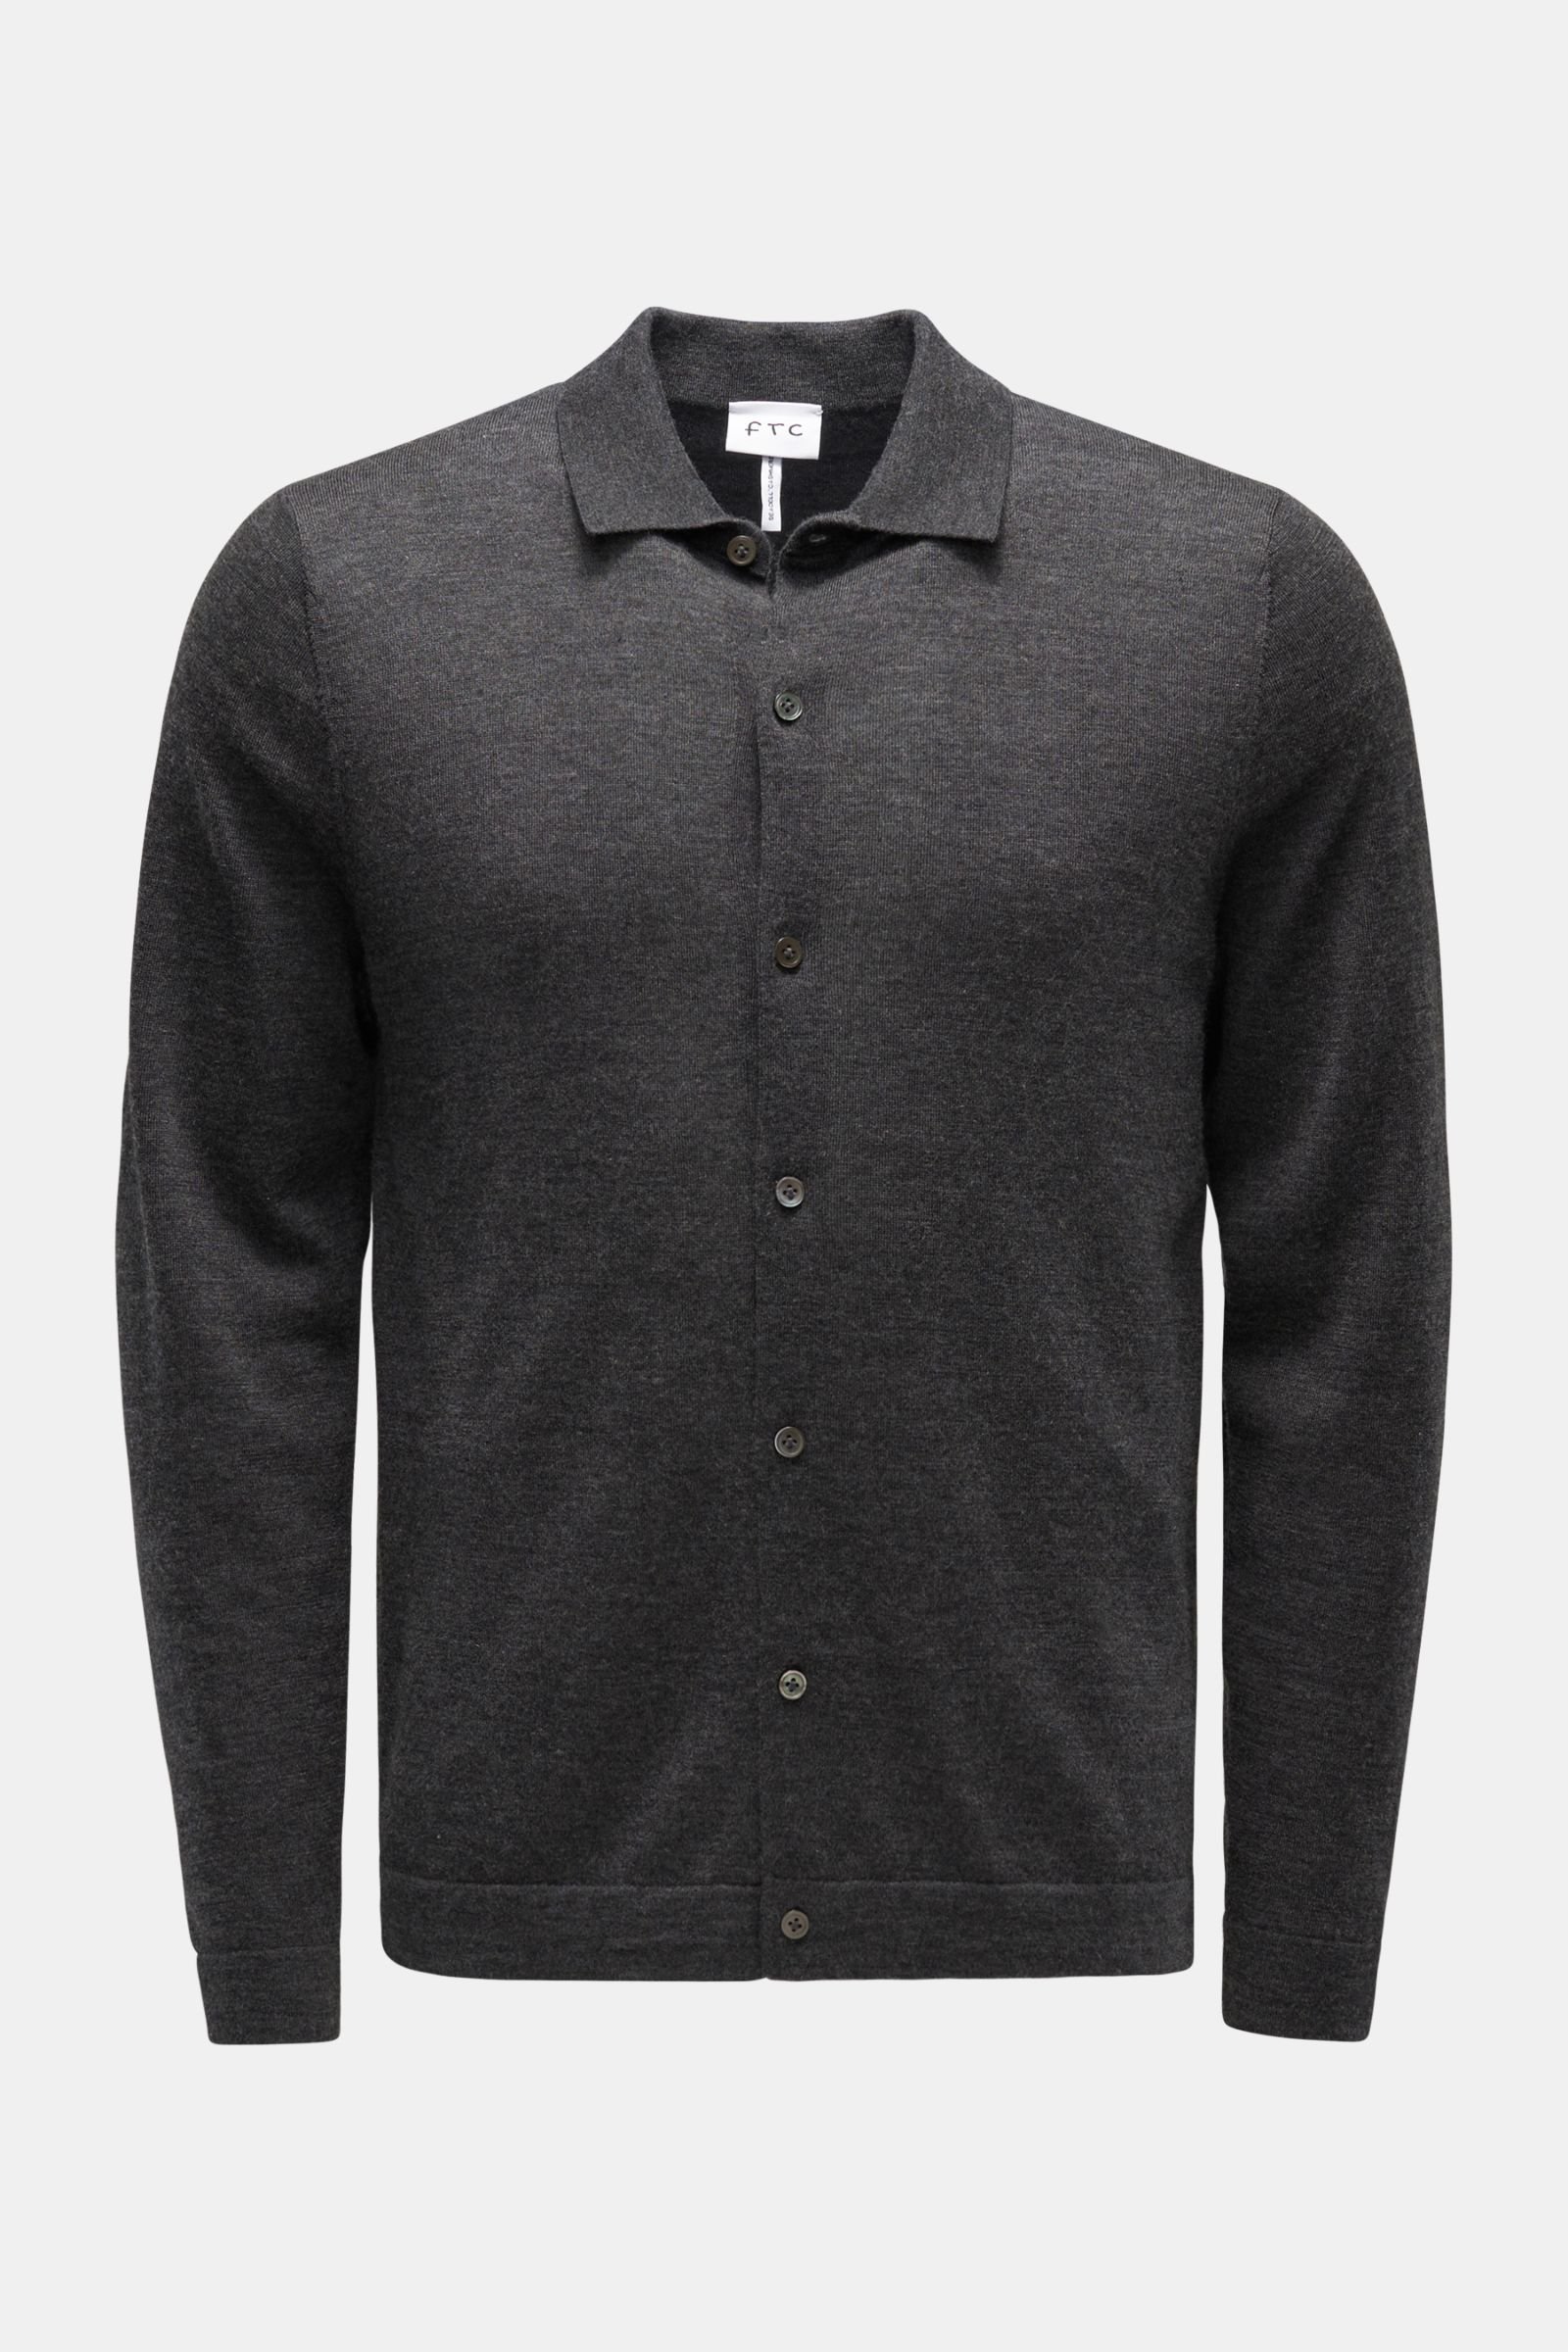 Knit shirt dark grey